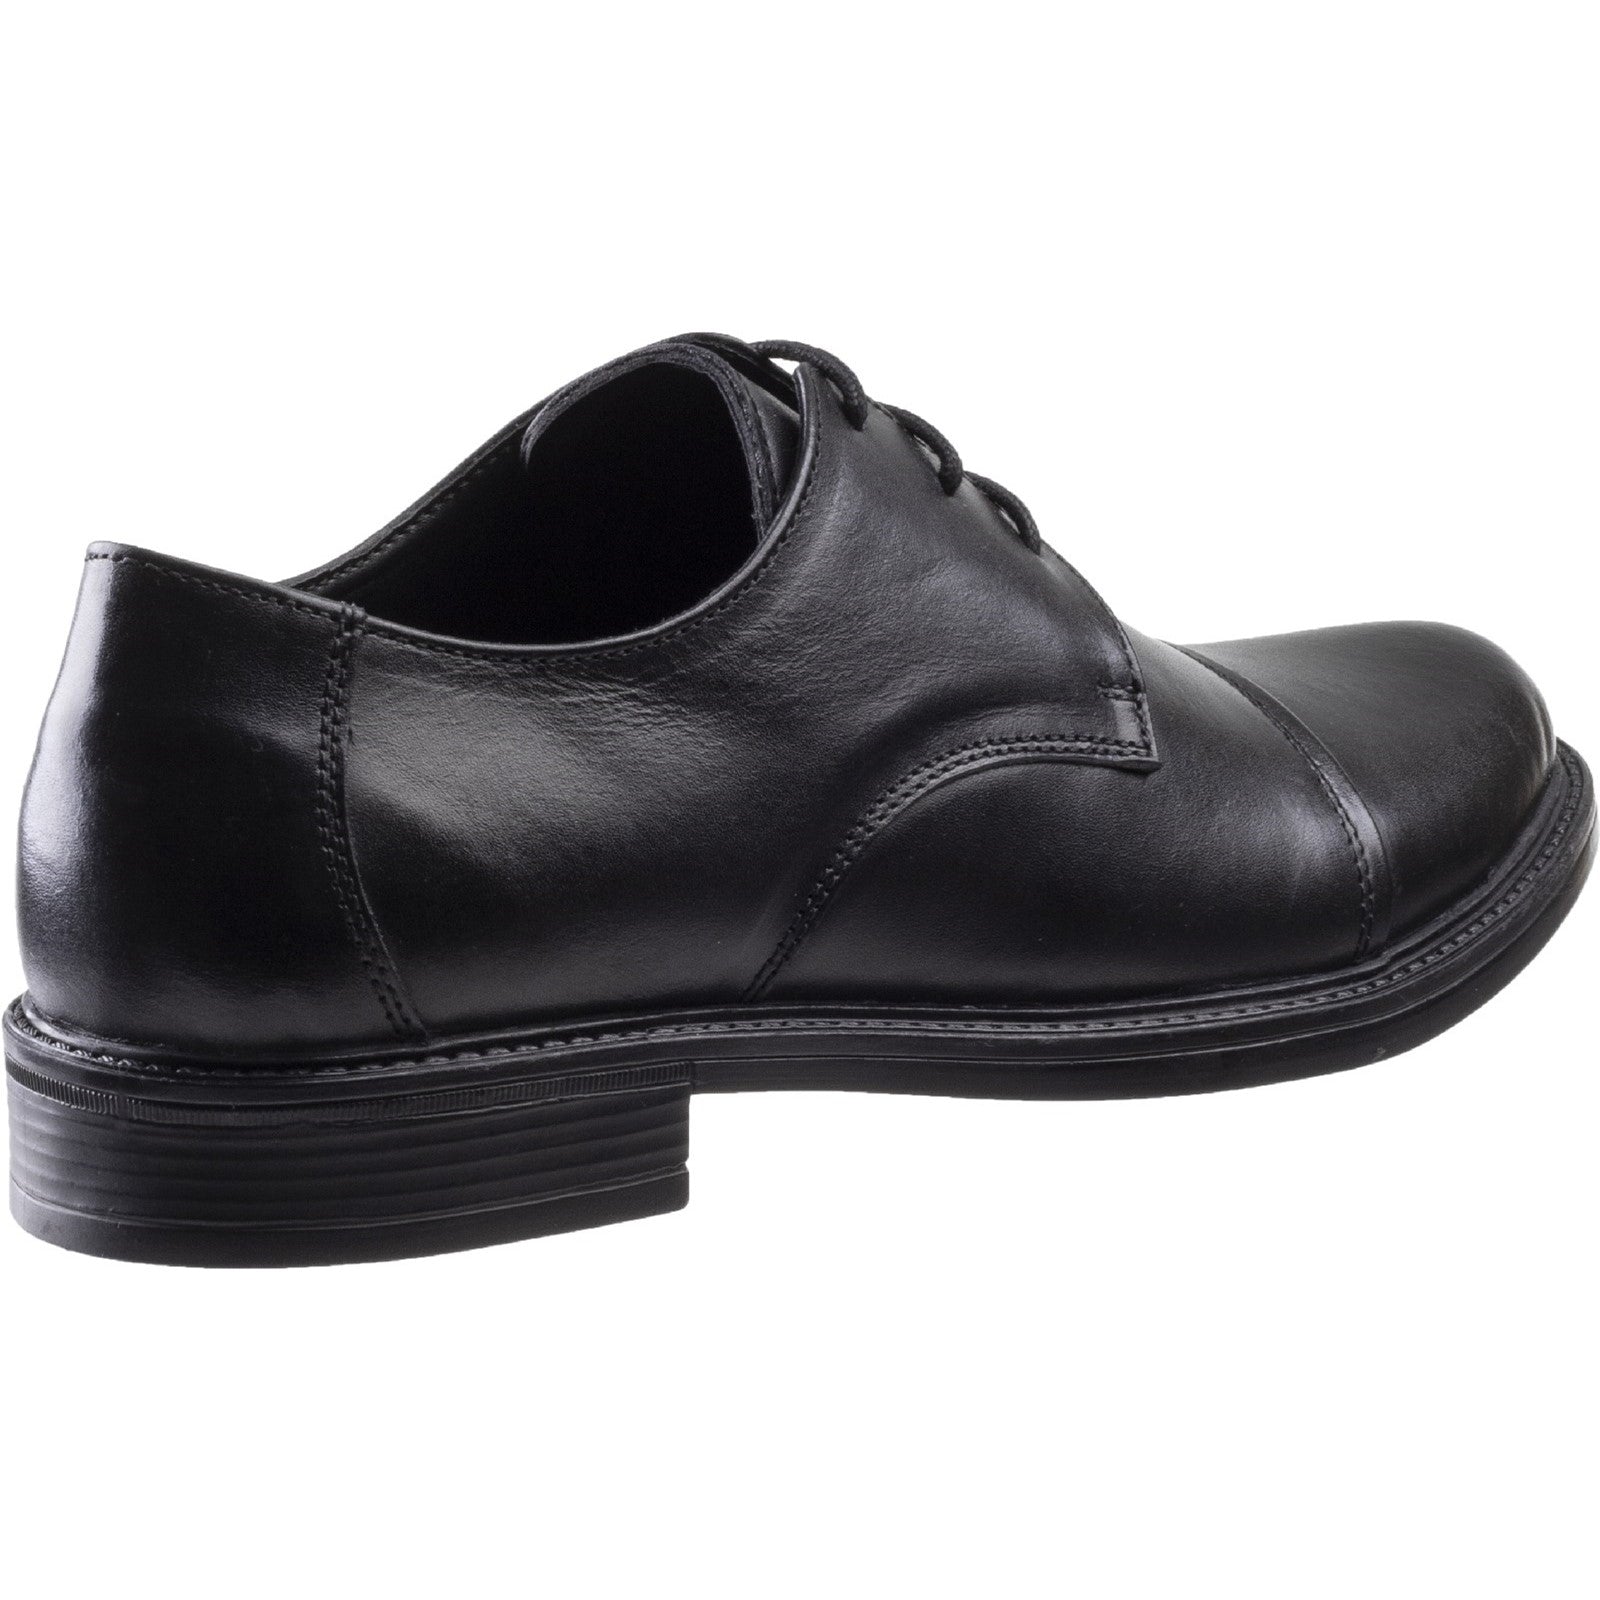 Amblers Bristol Shoe